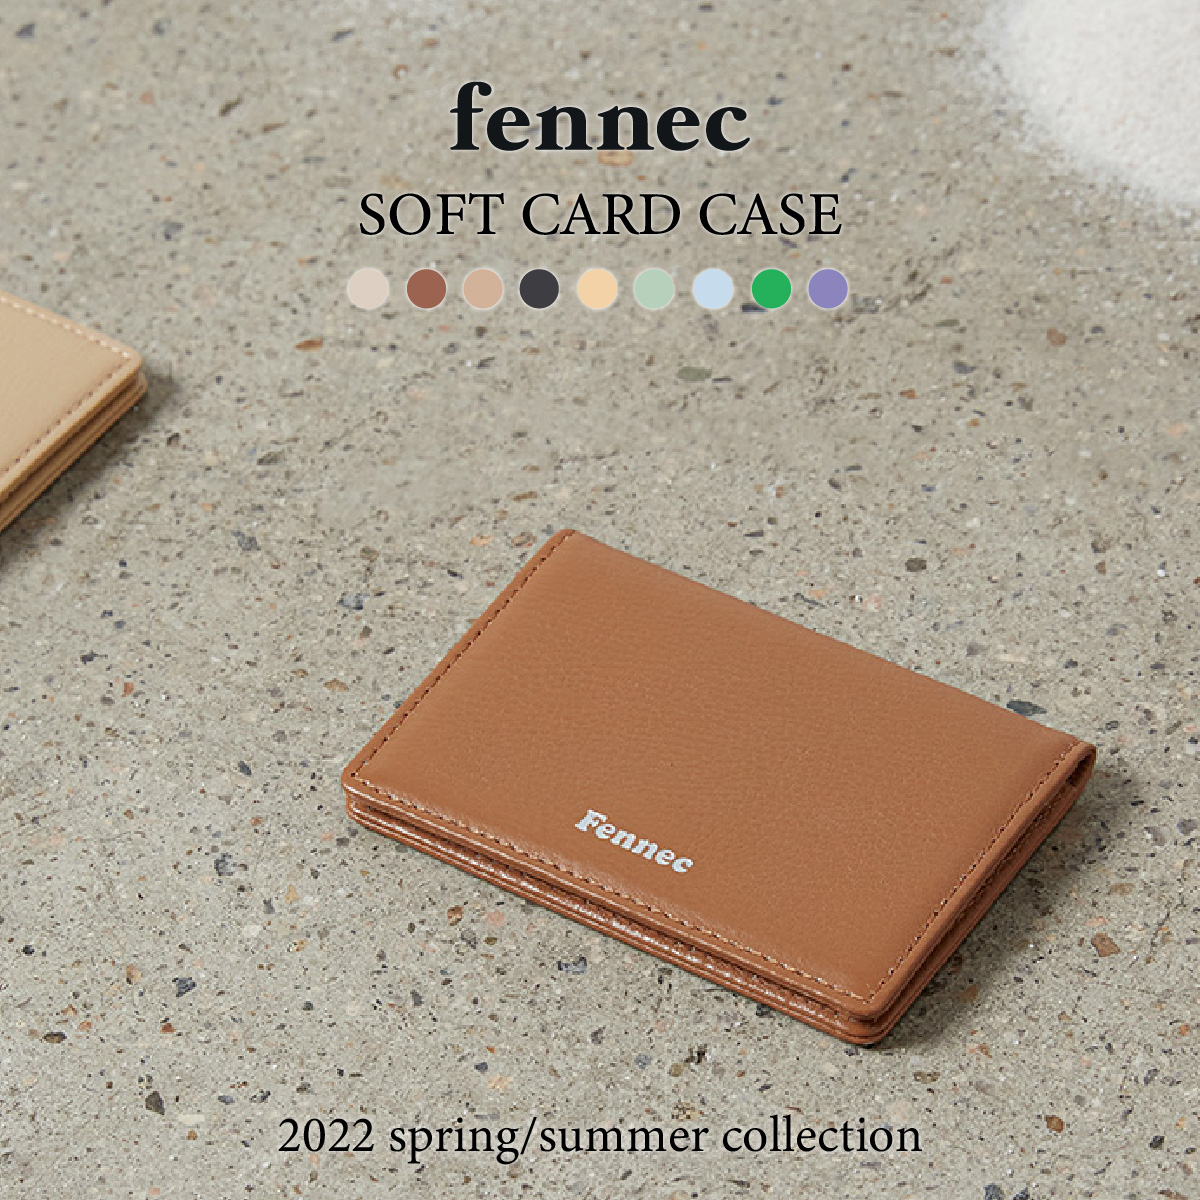 fennec SOFT CARD CASE  フェネック レディース カードケース  レザー ミニ財布 韓国 韓国ファッション 旅行 コンパクト財布 女子 誕生日 クリスマス プレゼント ギフト 